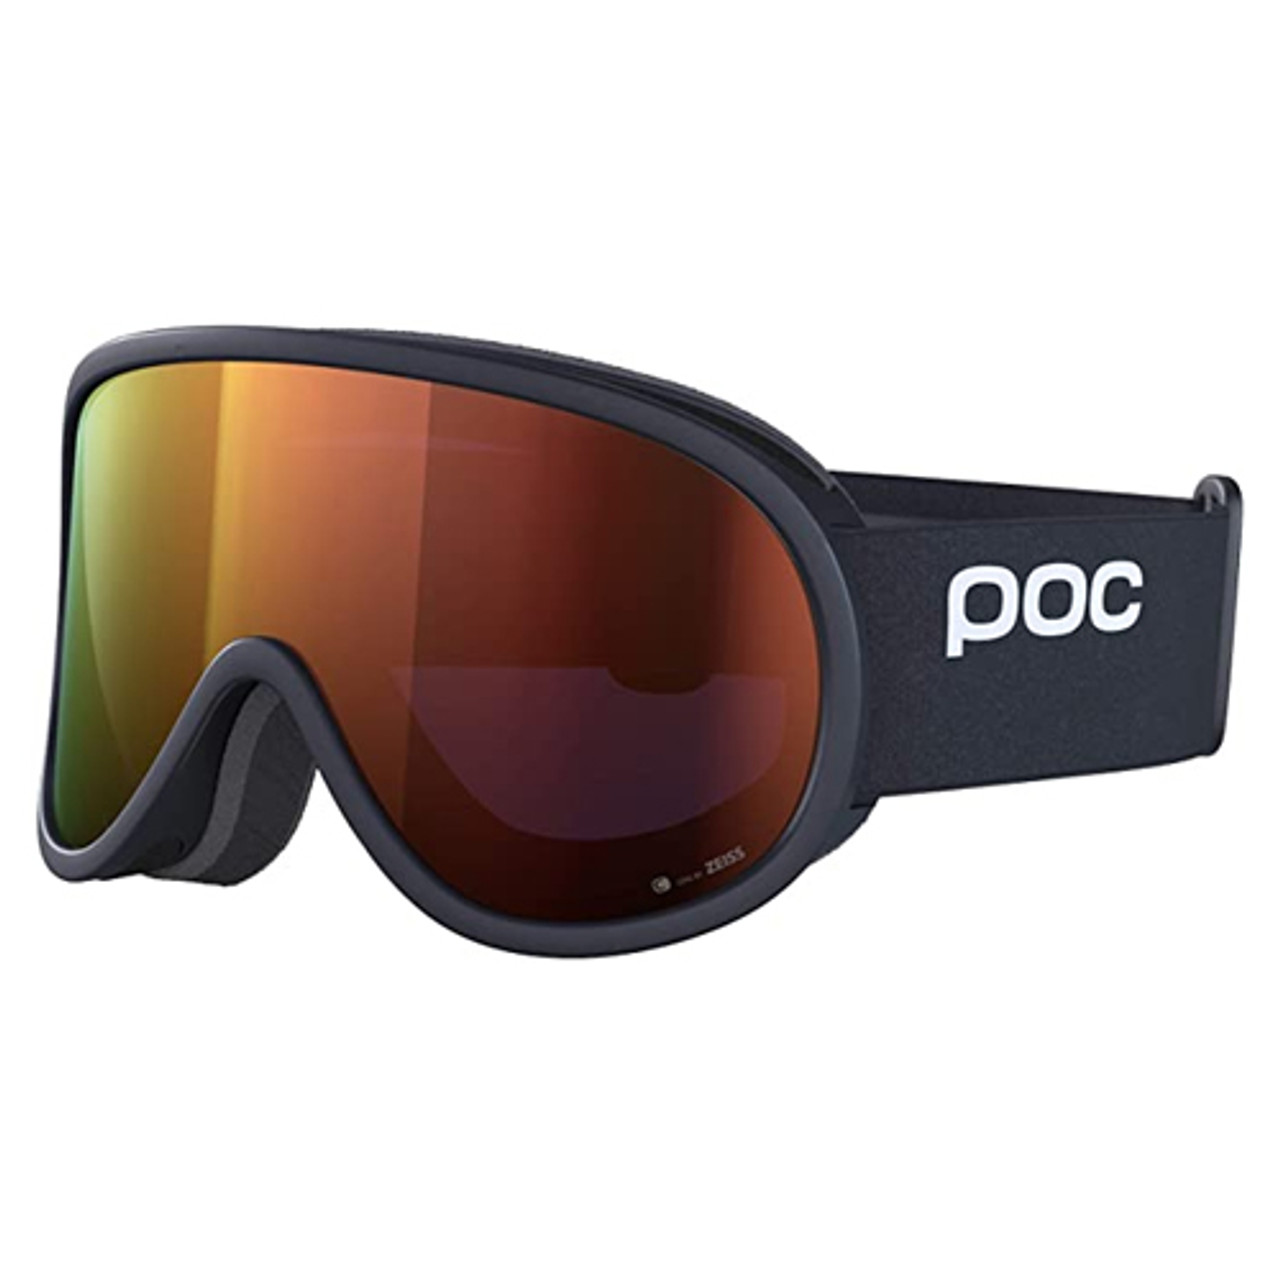 Lens for New POC Retina Ski Race Goggles